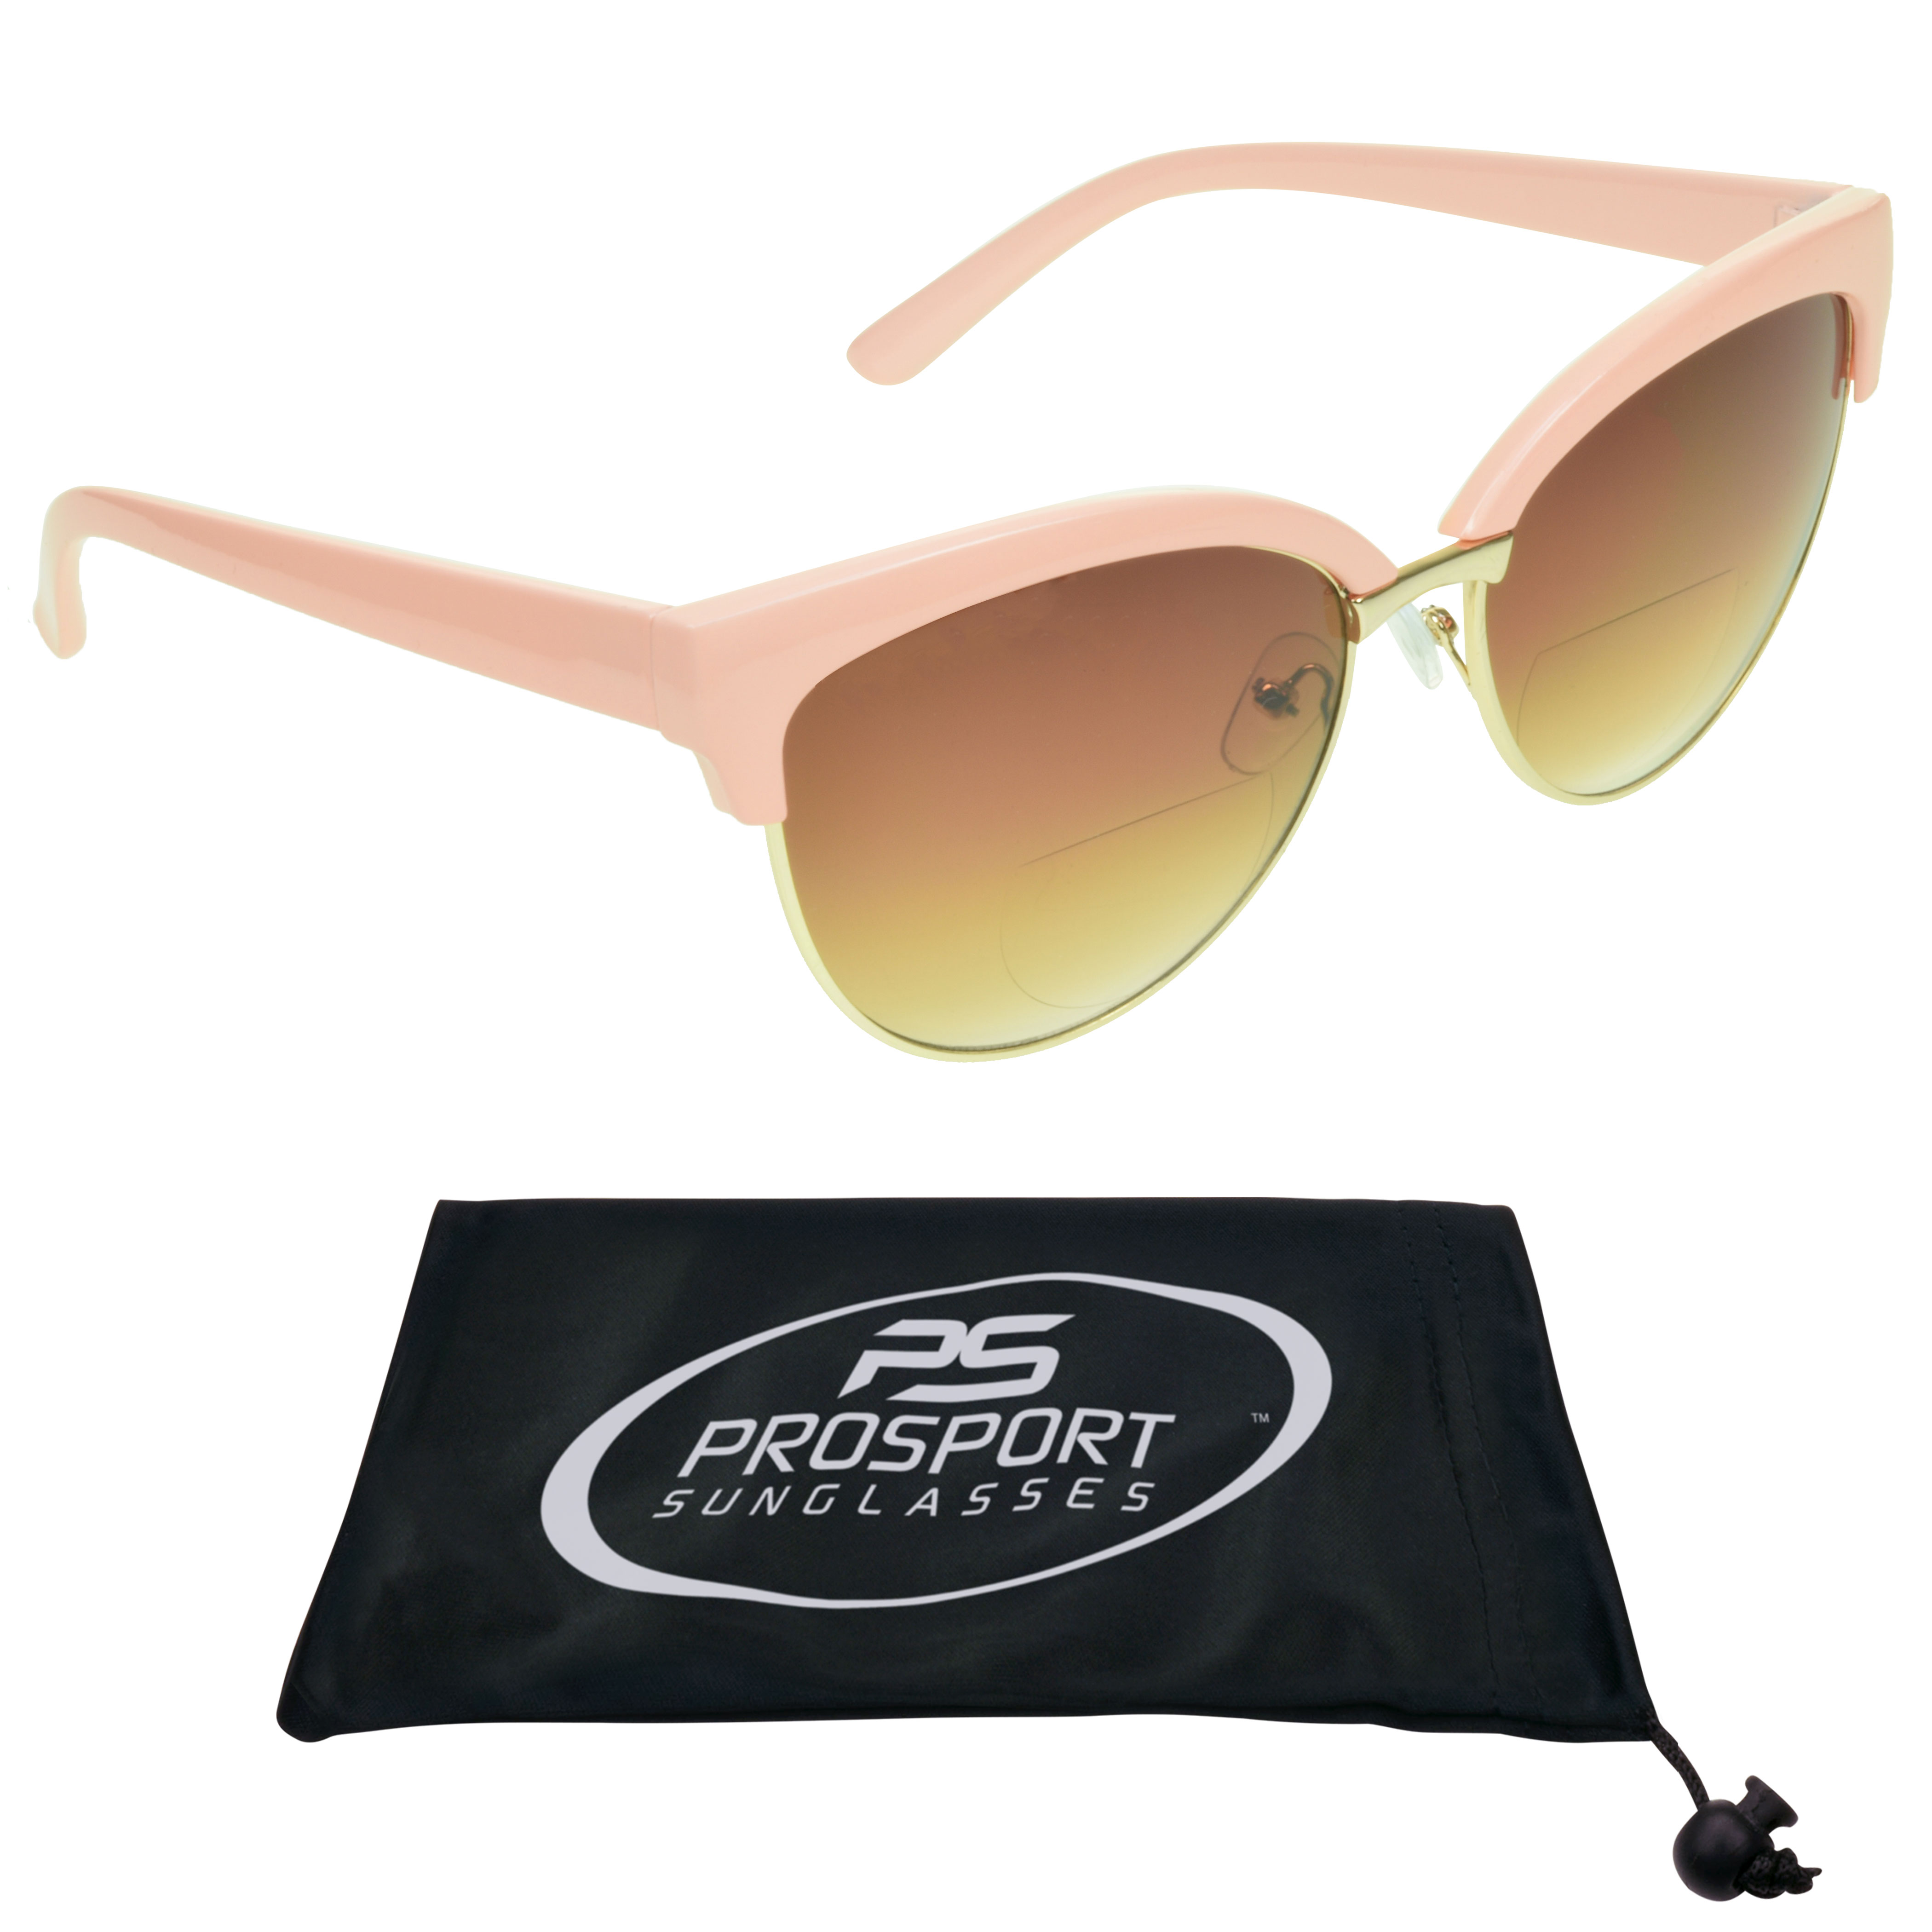 proSPORT Women Bifocal Reading Cateye Fashion Horn Rim Sunglasses Pink Gold Frame Brown Lens +1.00 - image 1 of 5